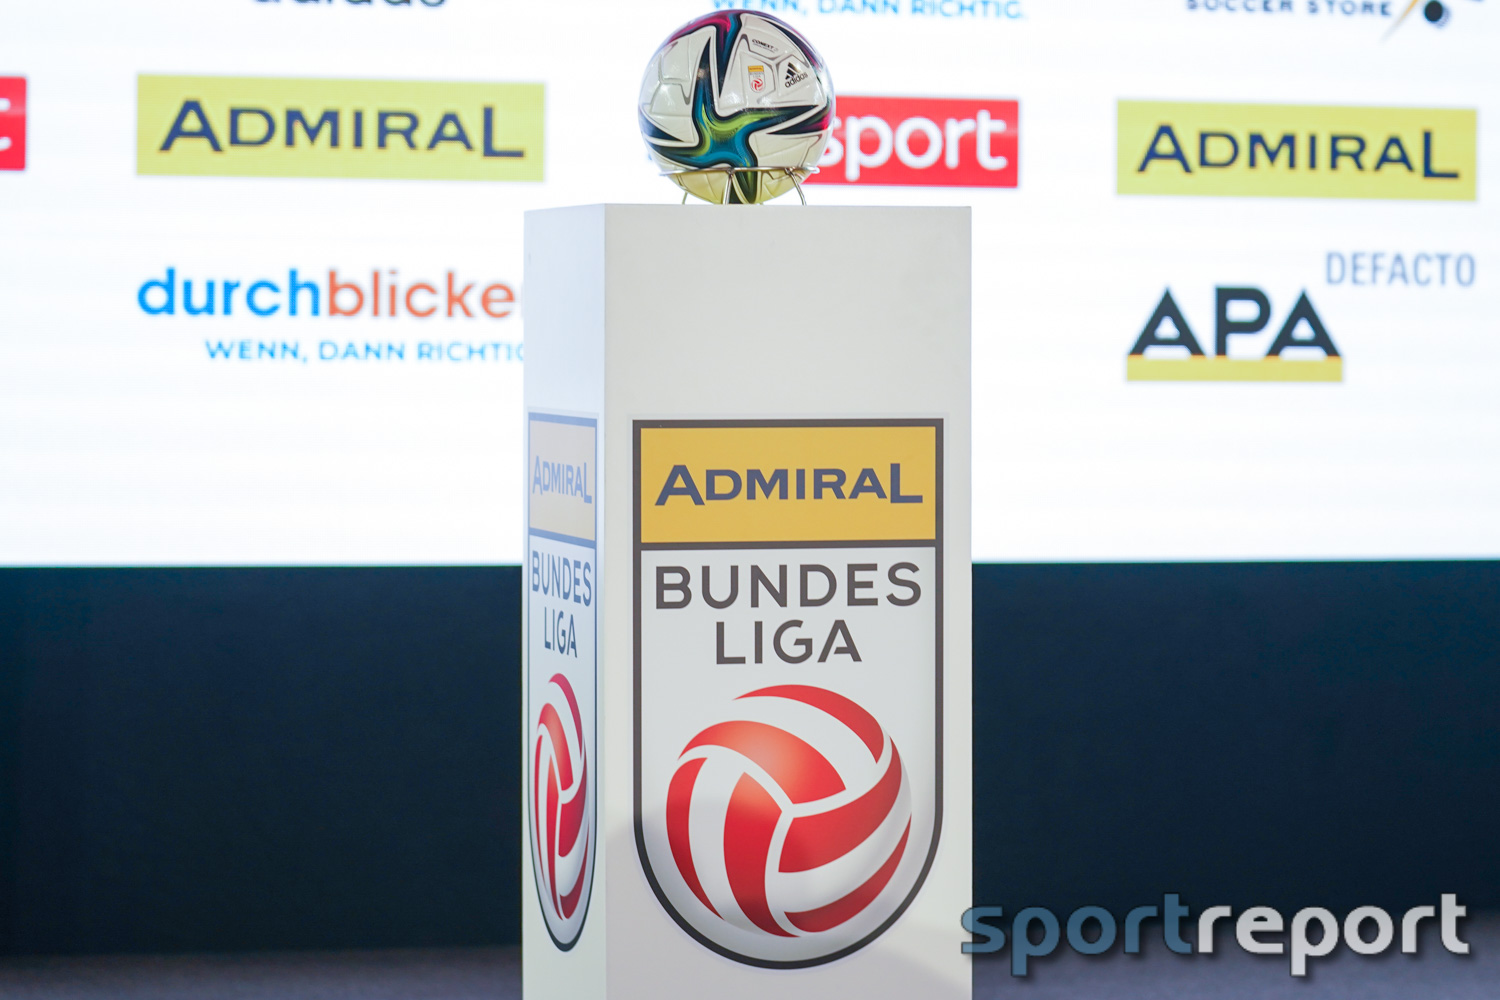 Bundesliga, Admiral Bundesliga, #AdmiralBL